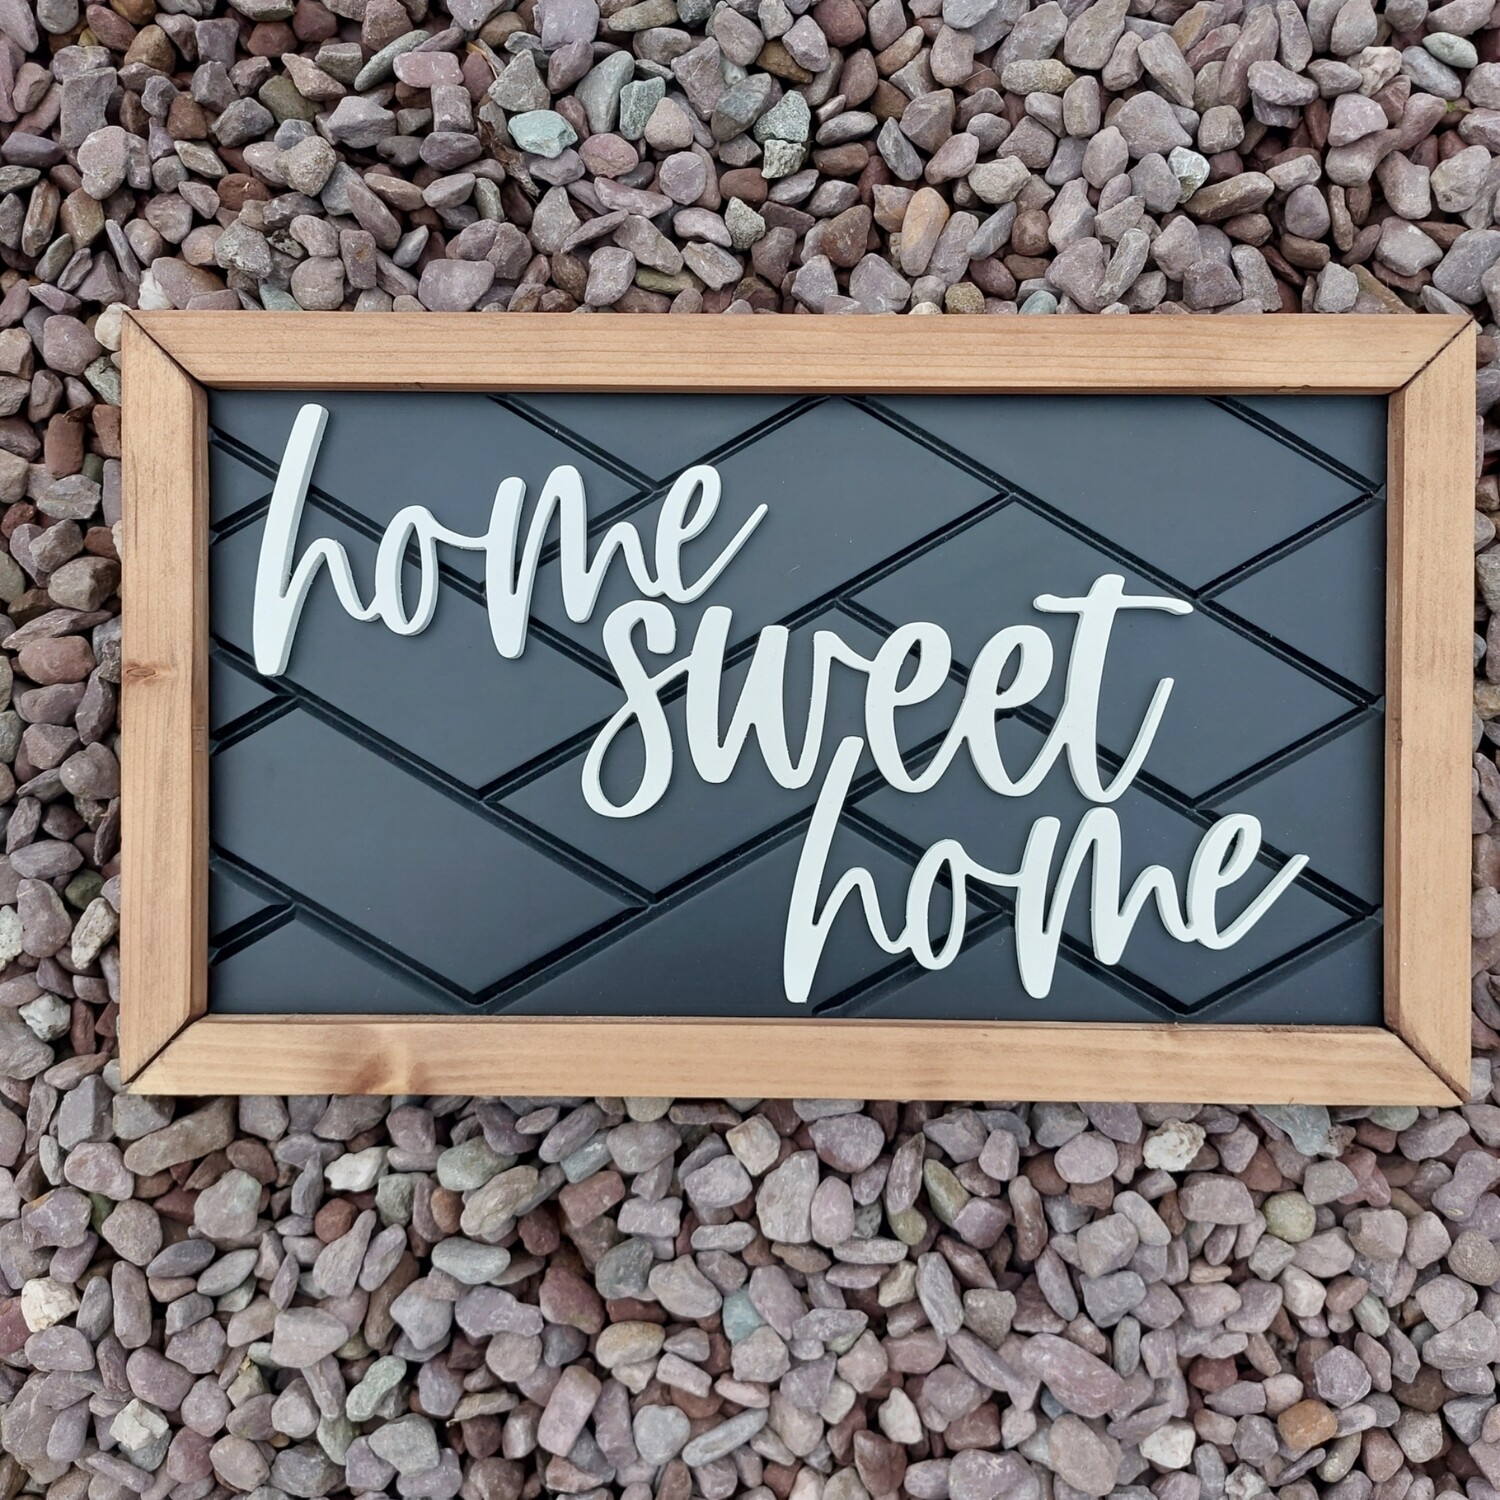 Home Sweet Home Framed Sign